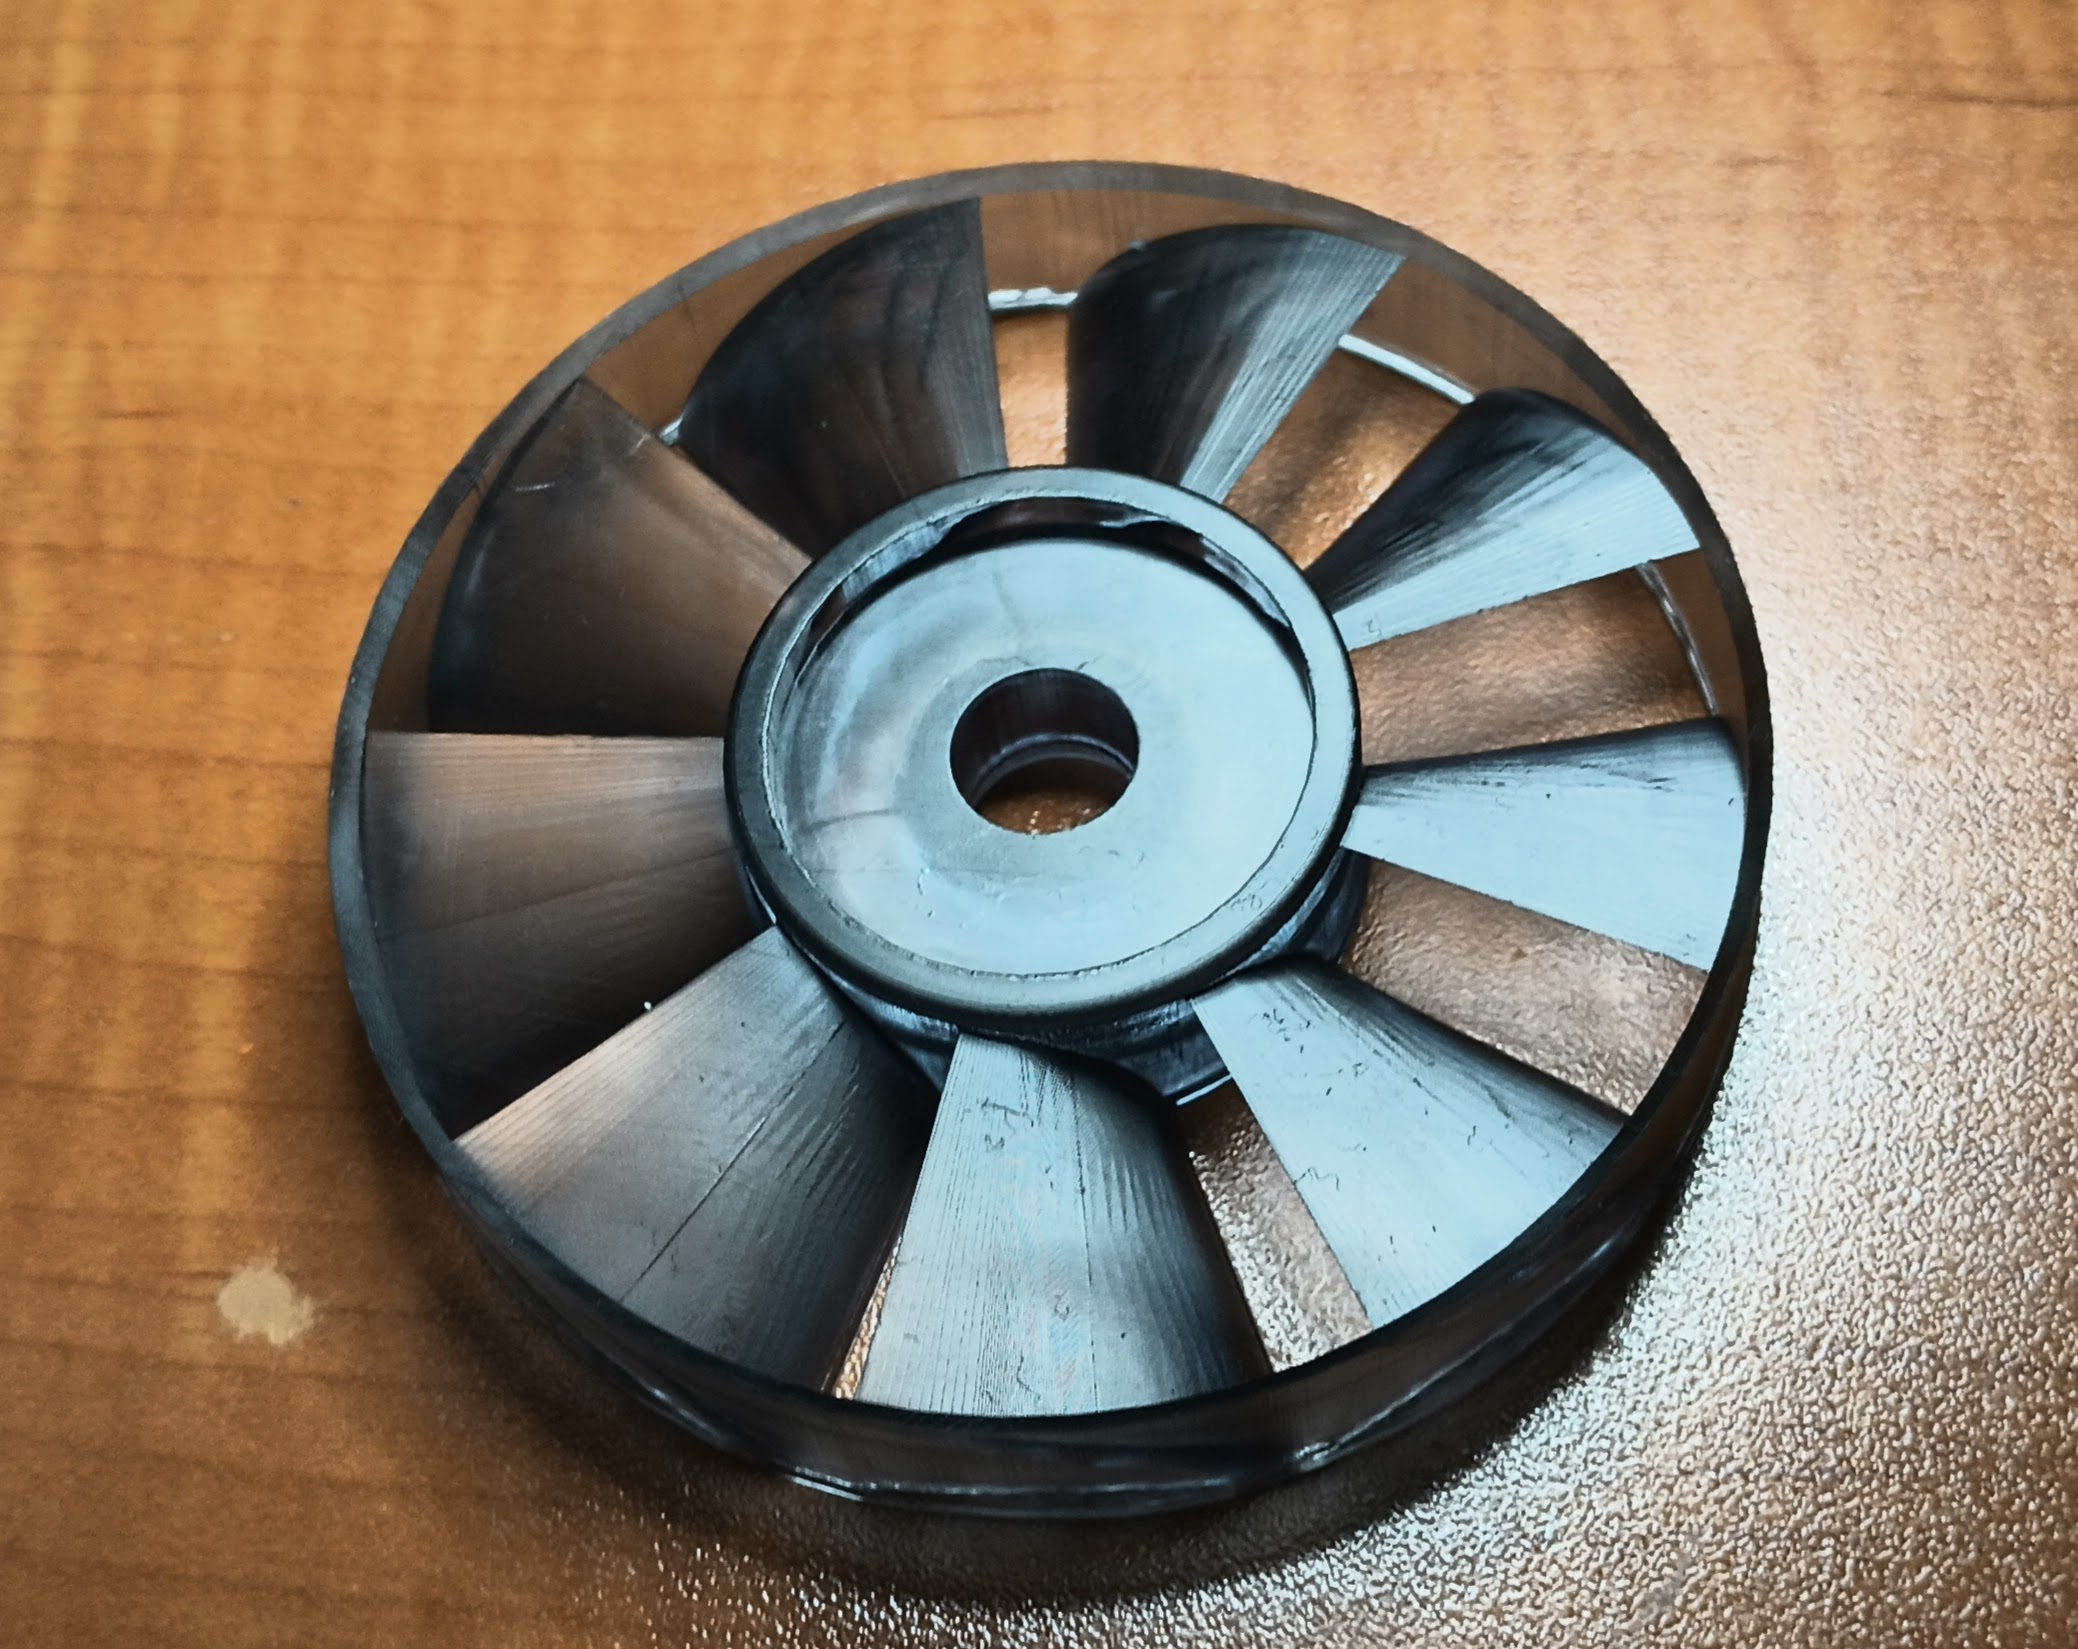 Replacement Fan Craftsman/Husky Air Compressor